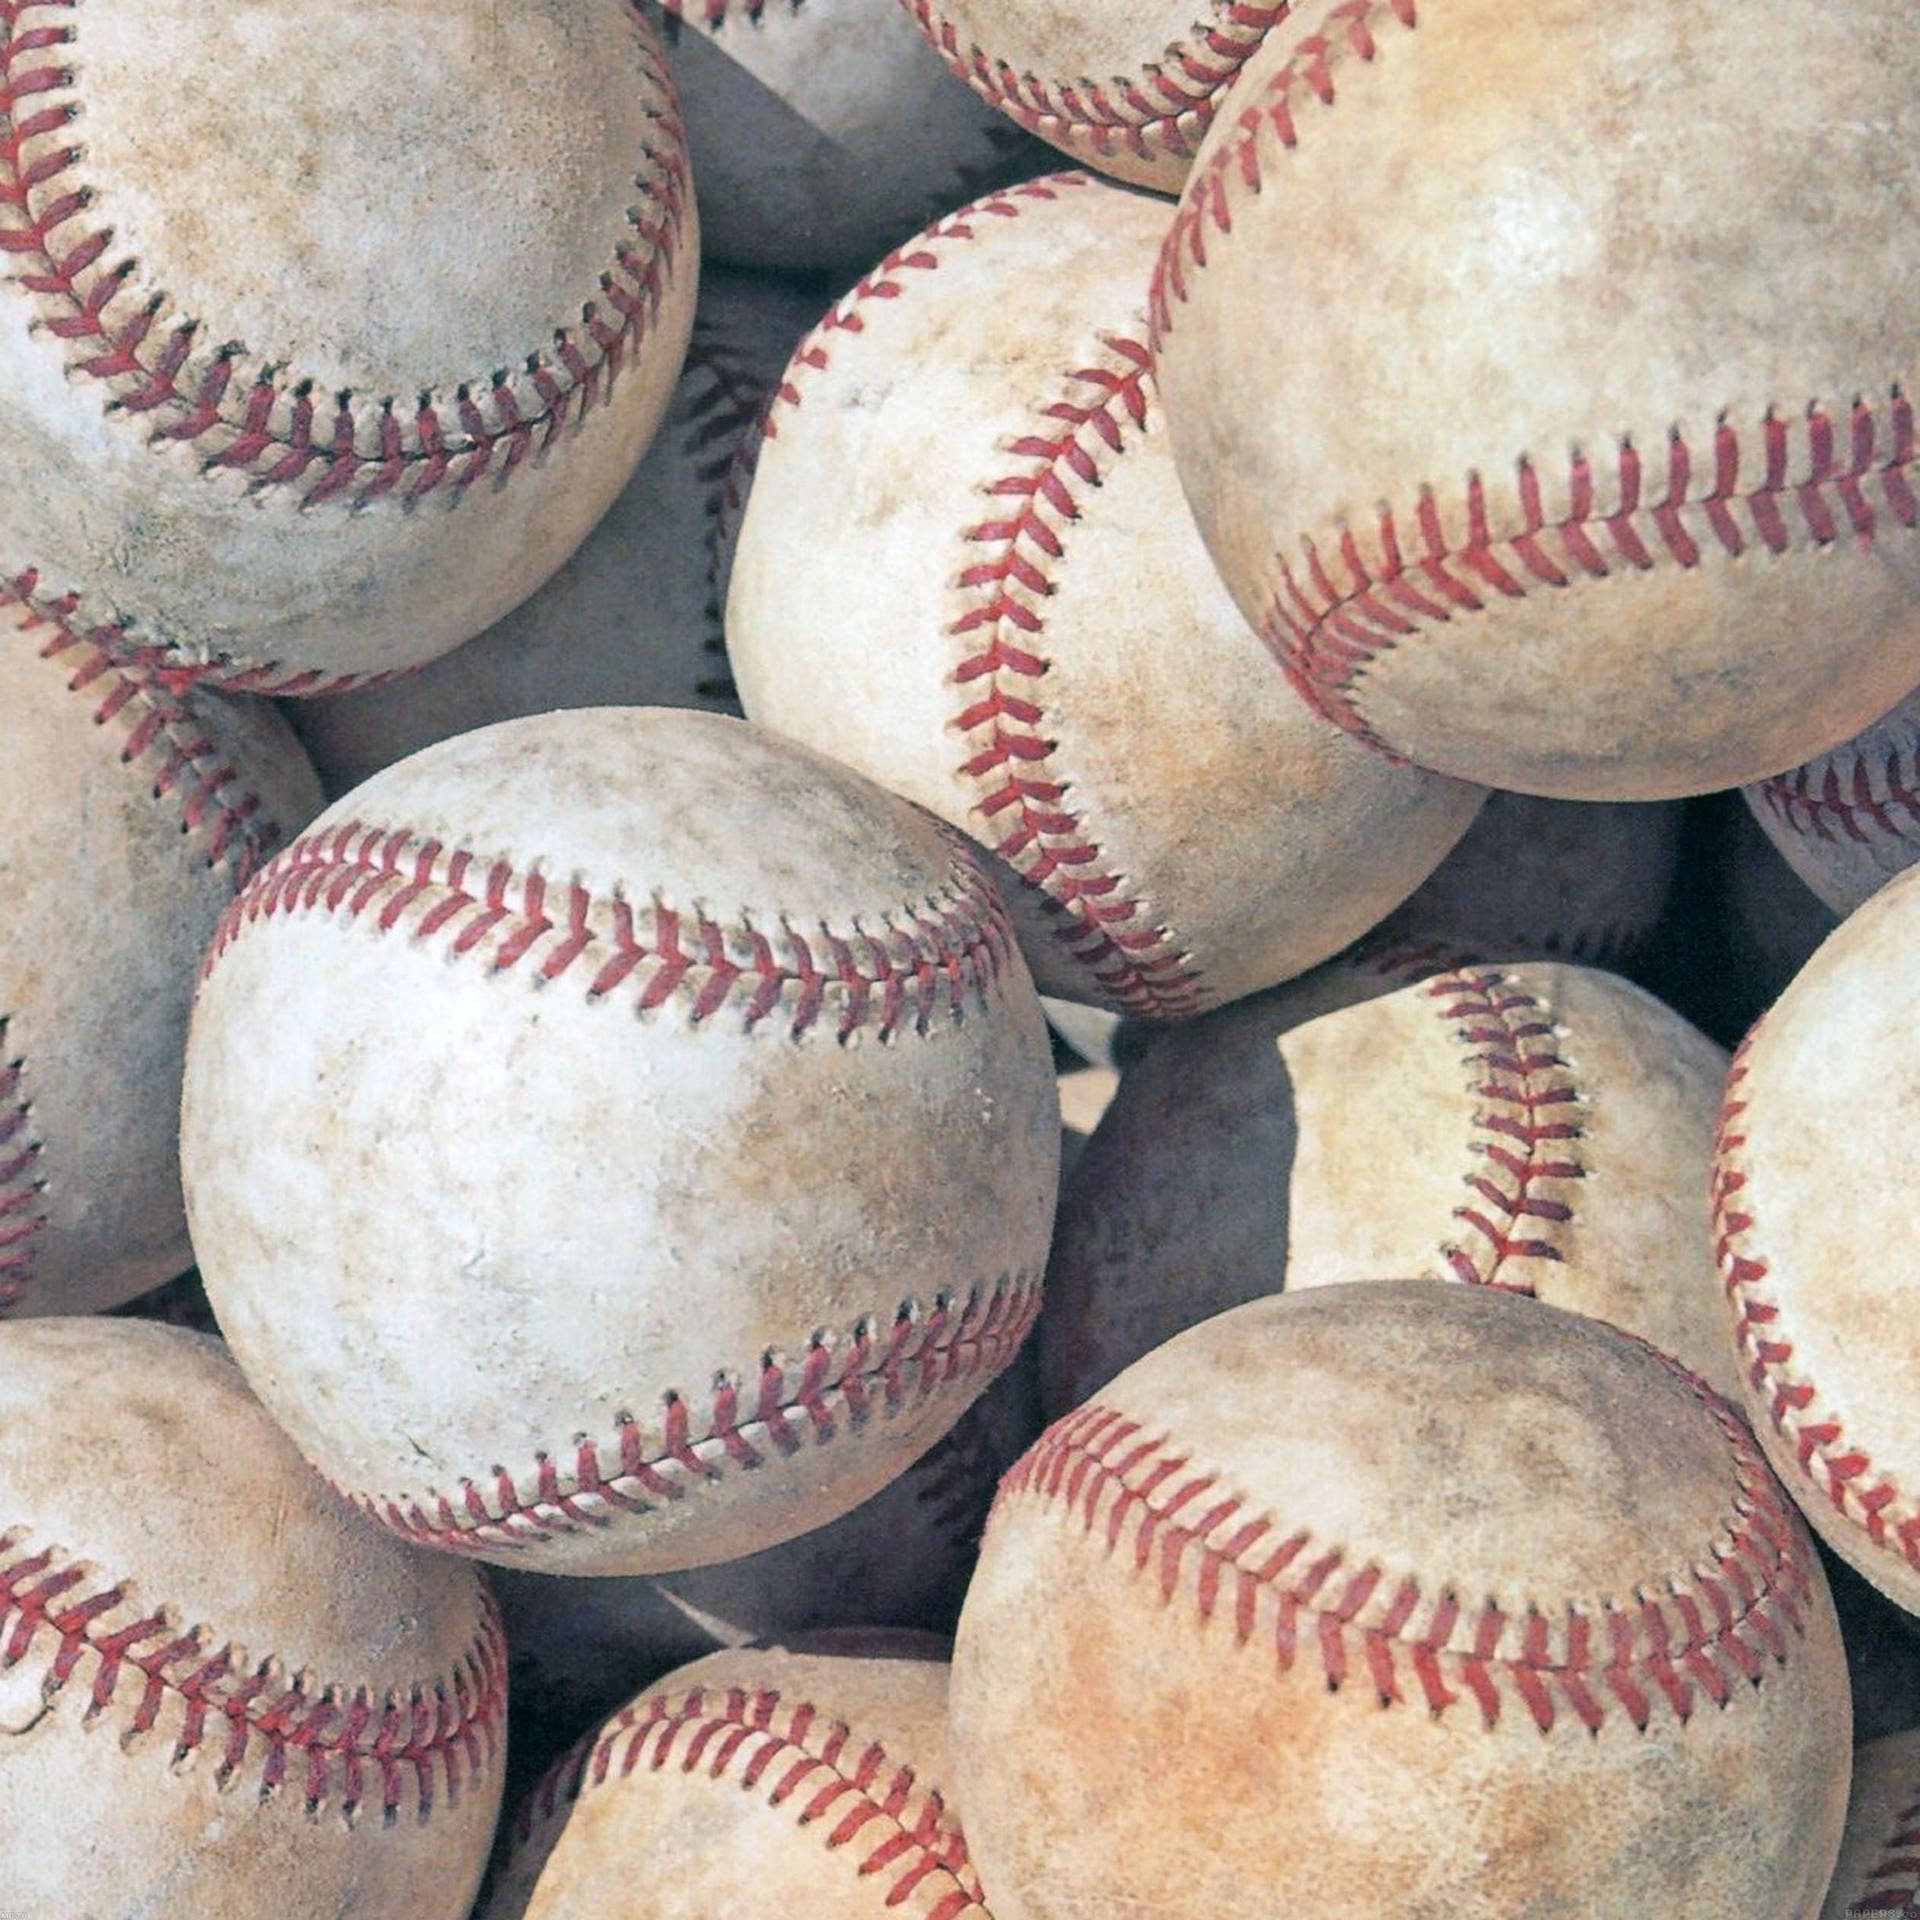 Dirty Baseball Pile Background